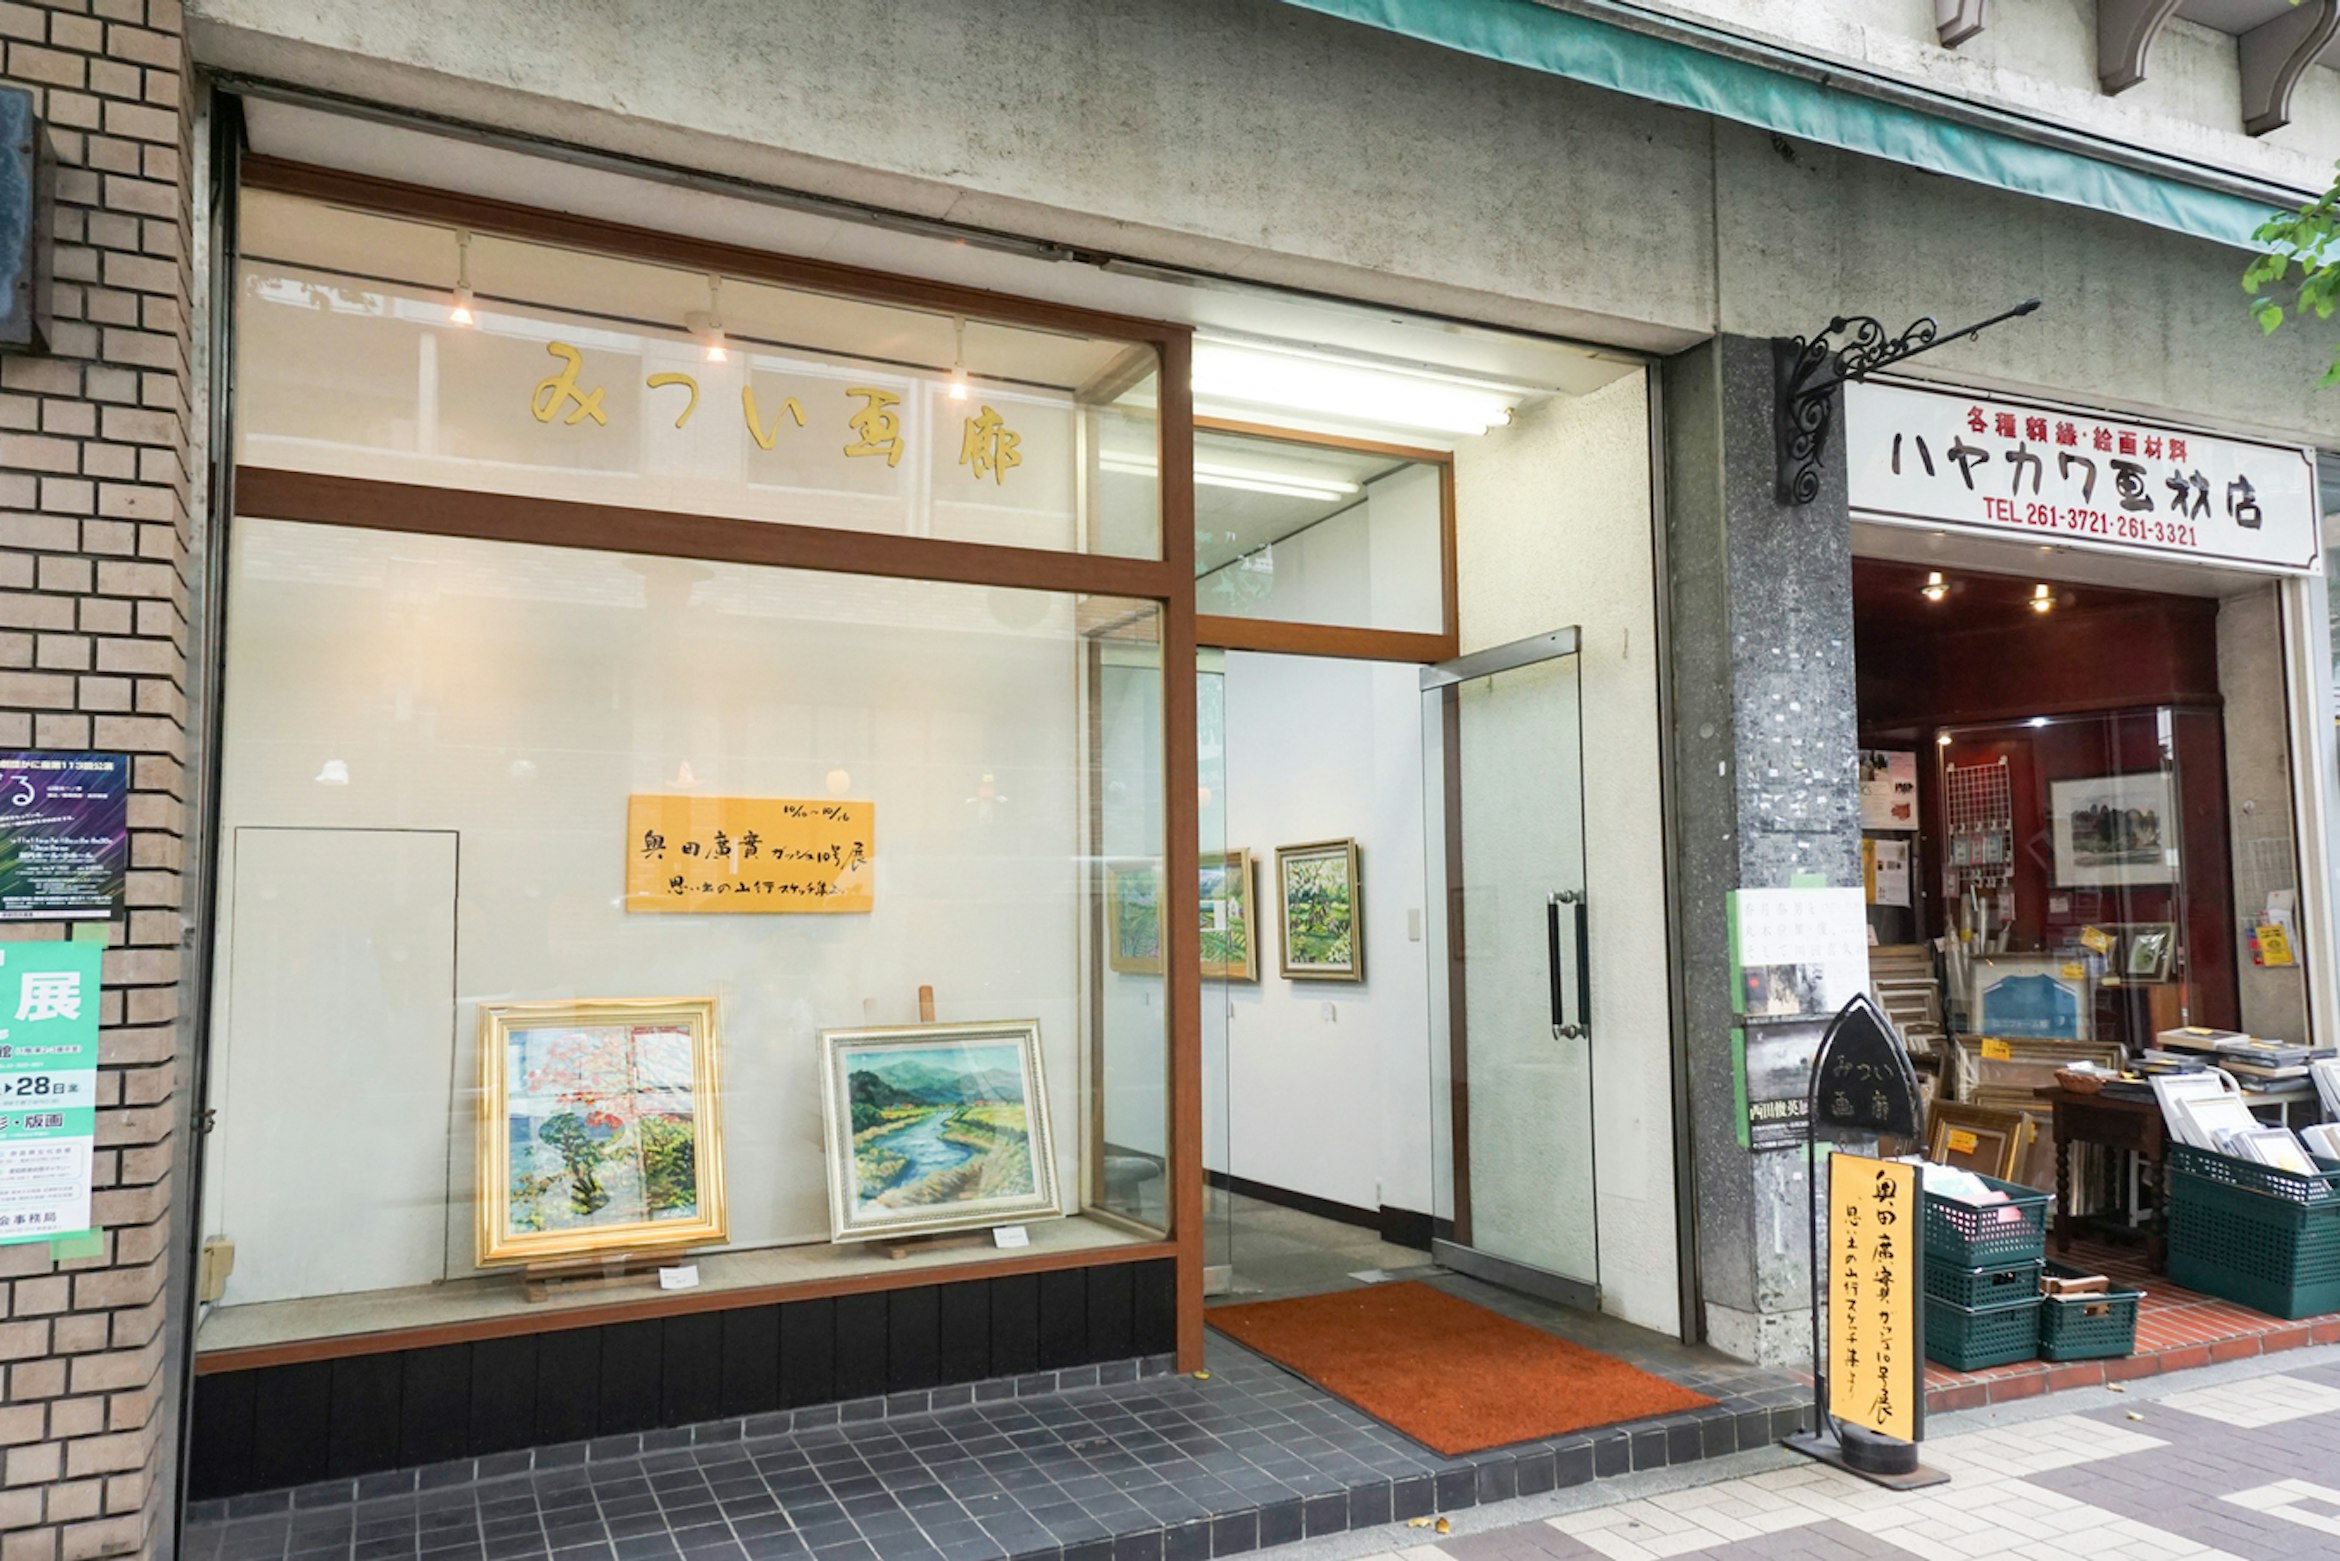 Hayakawa Artist's Shop